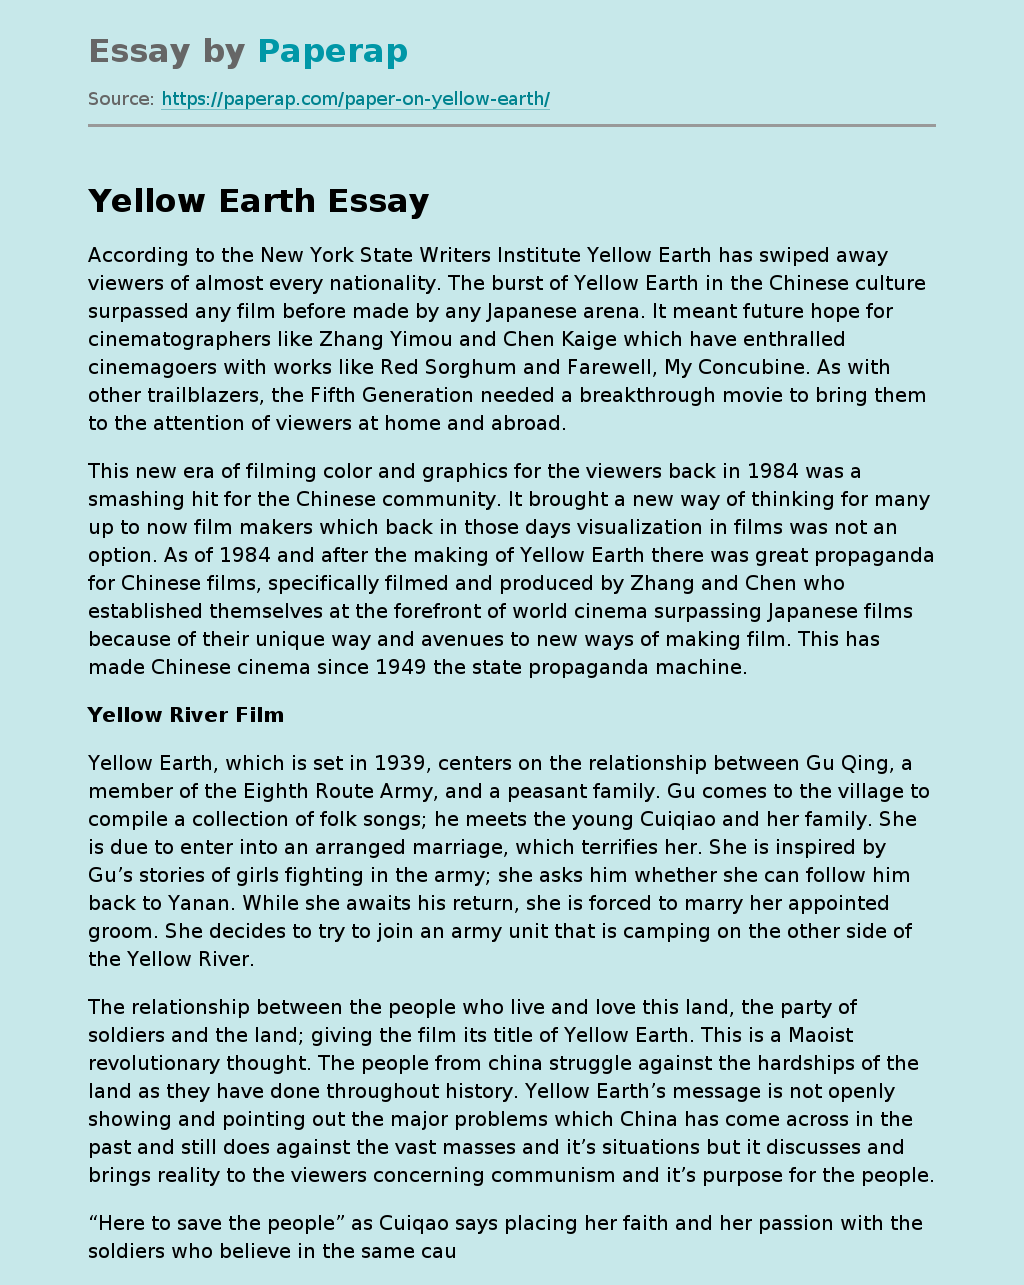 Yellow Earth's Global Impact